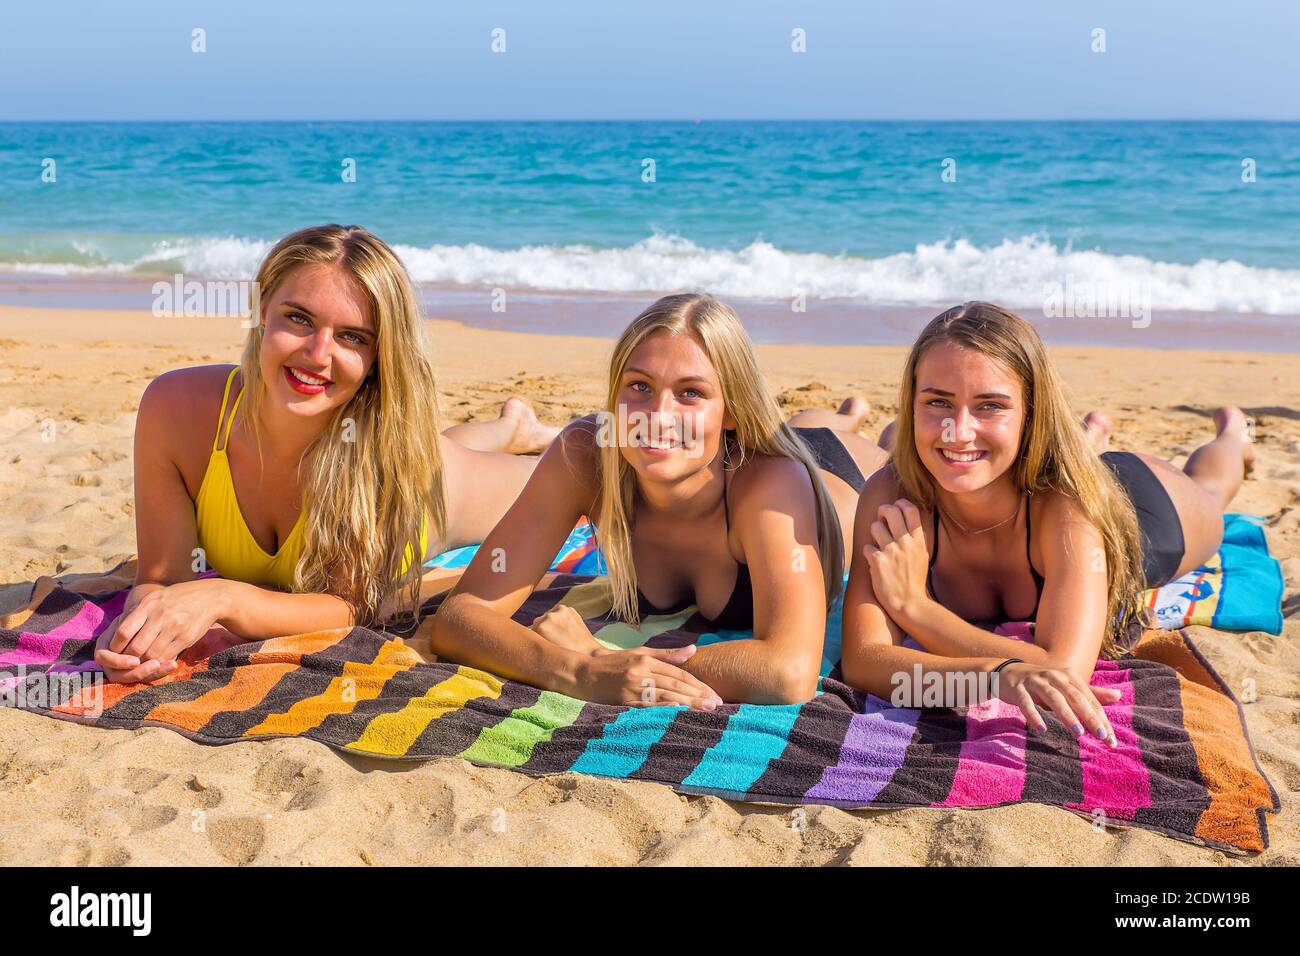 Three young european women sunbathing on beach Stock Photo